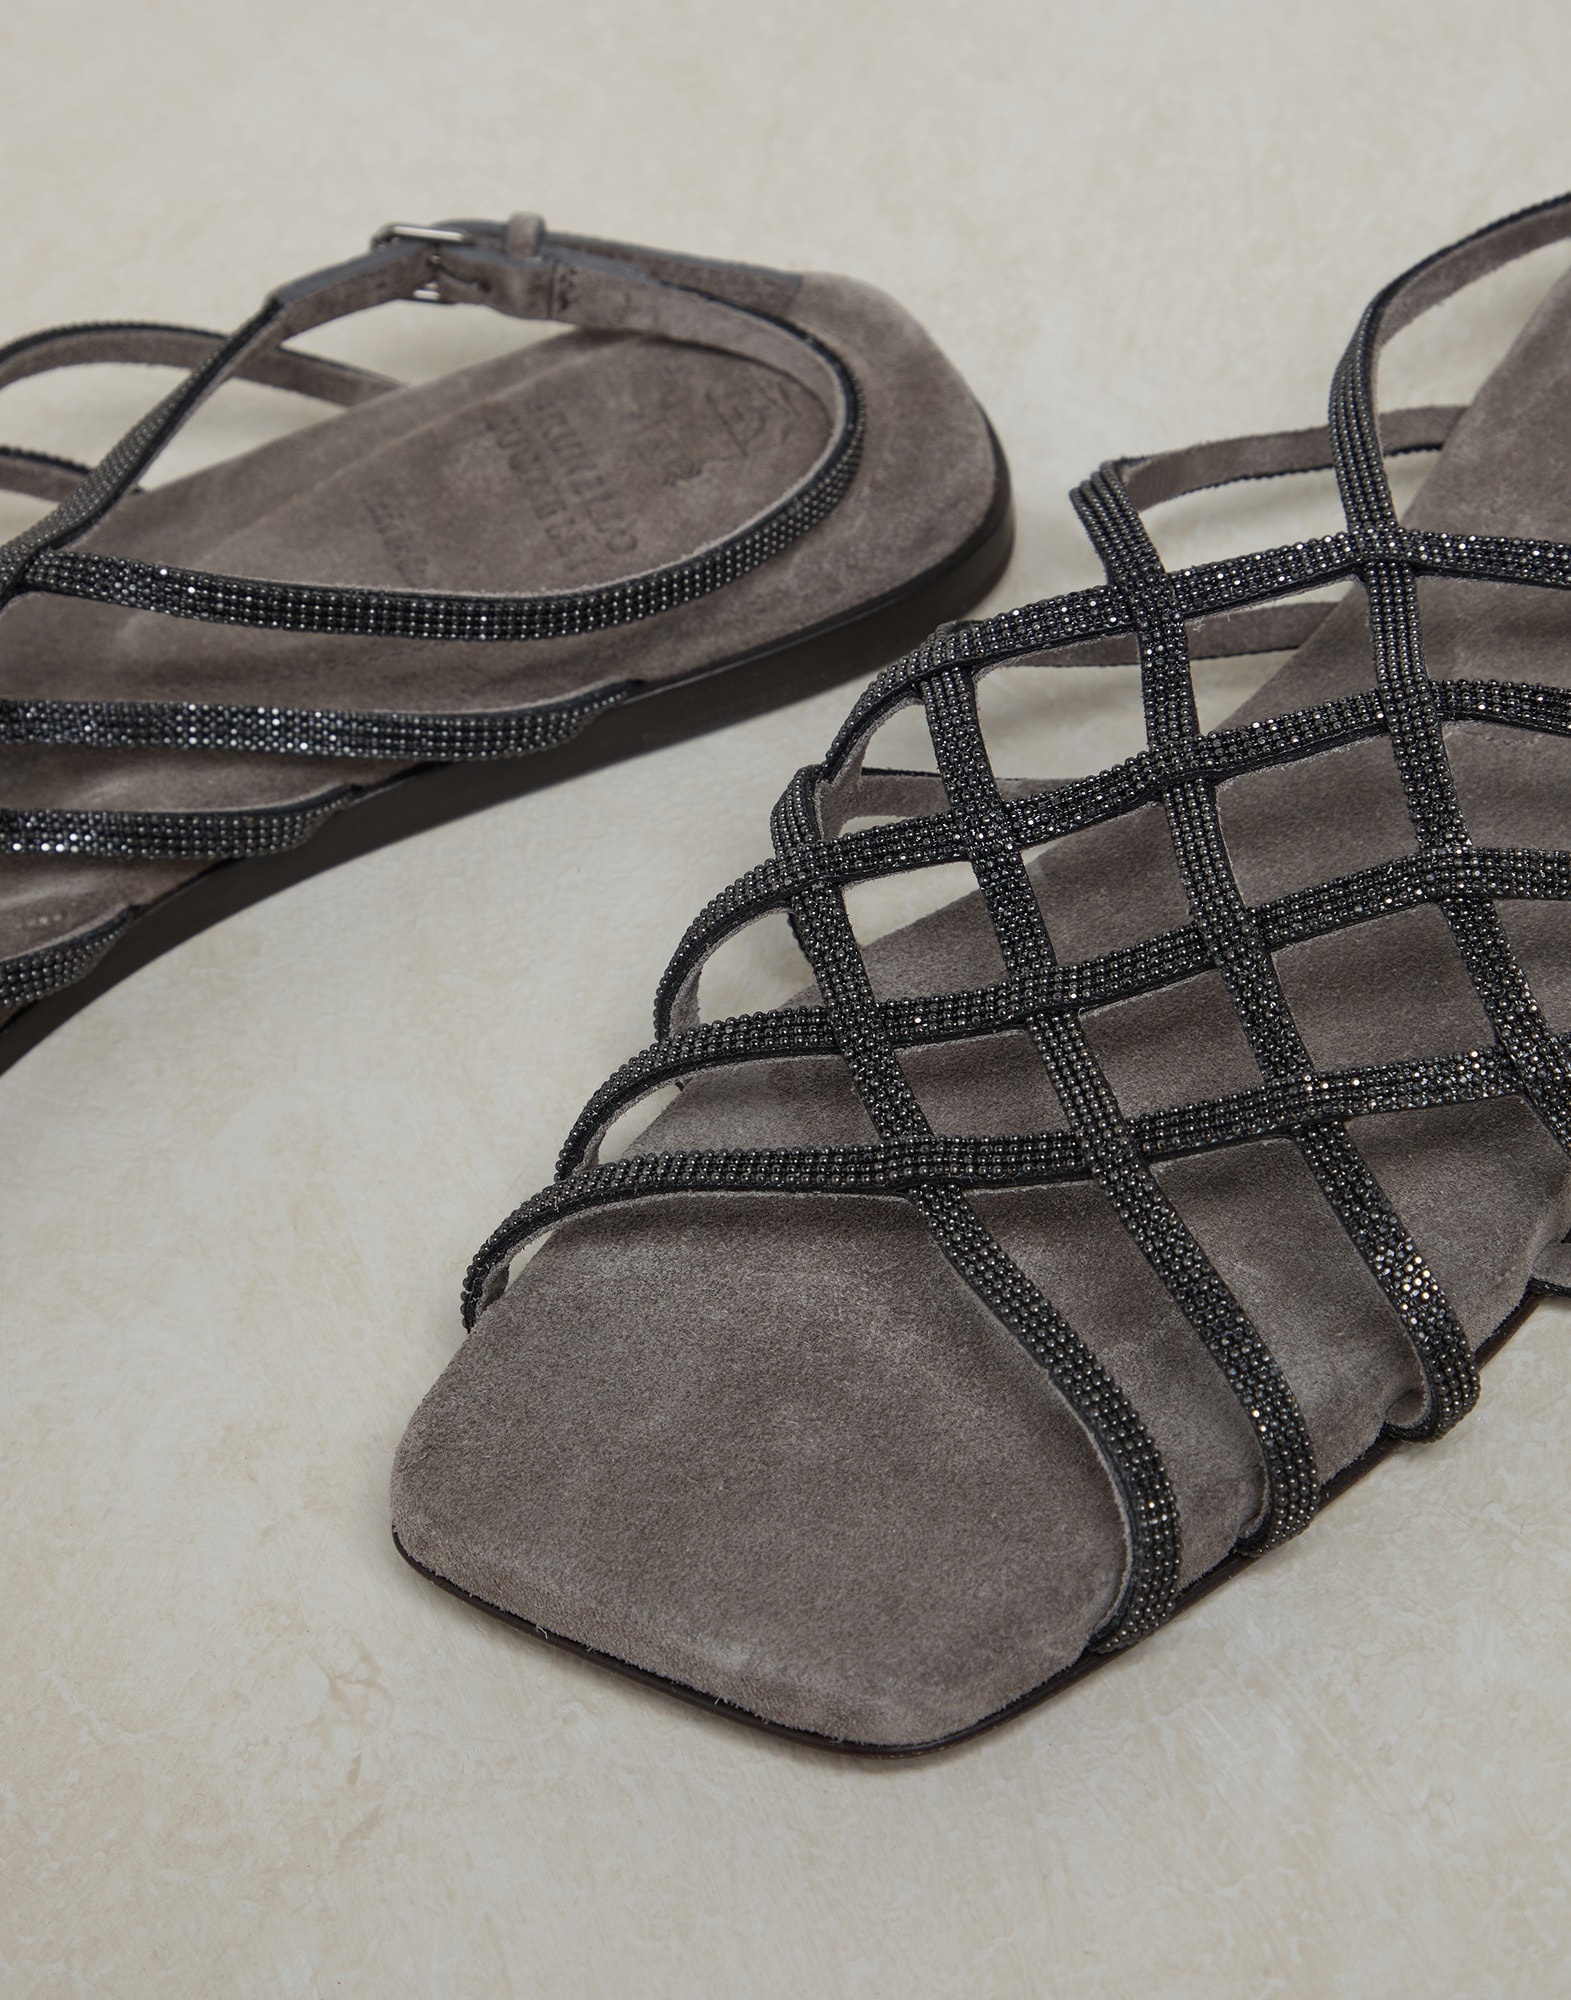 Precious Net sandals in suede - 4